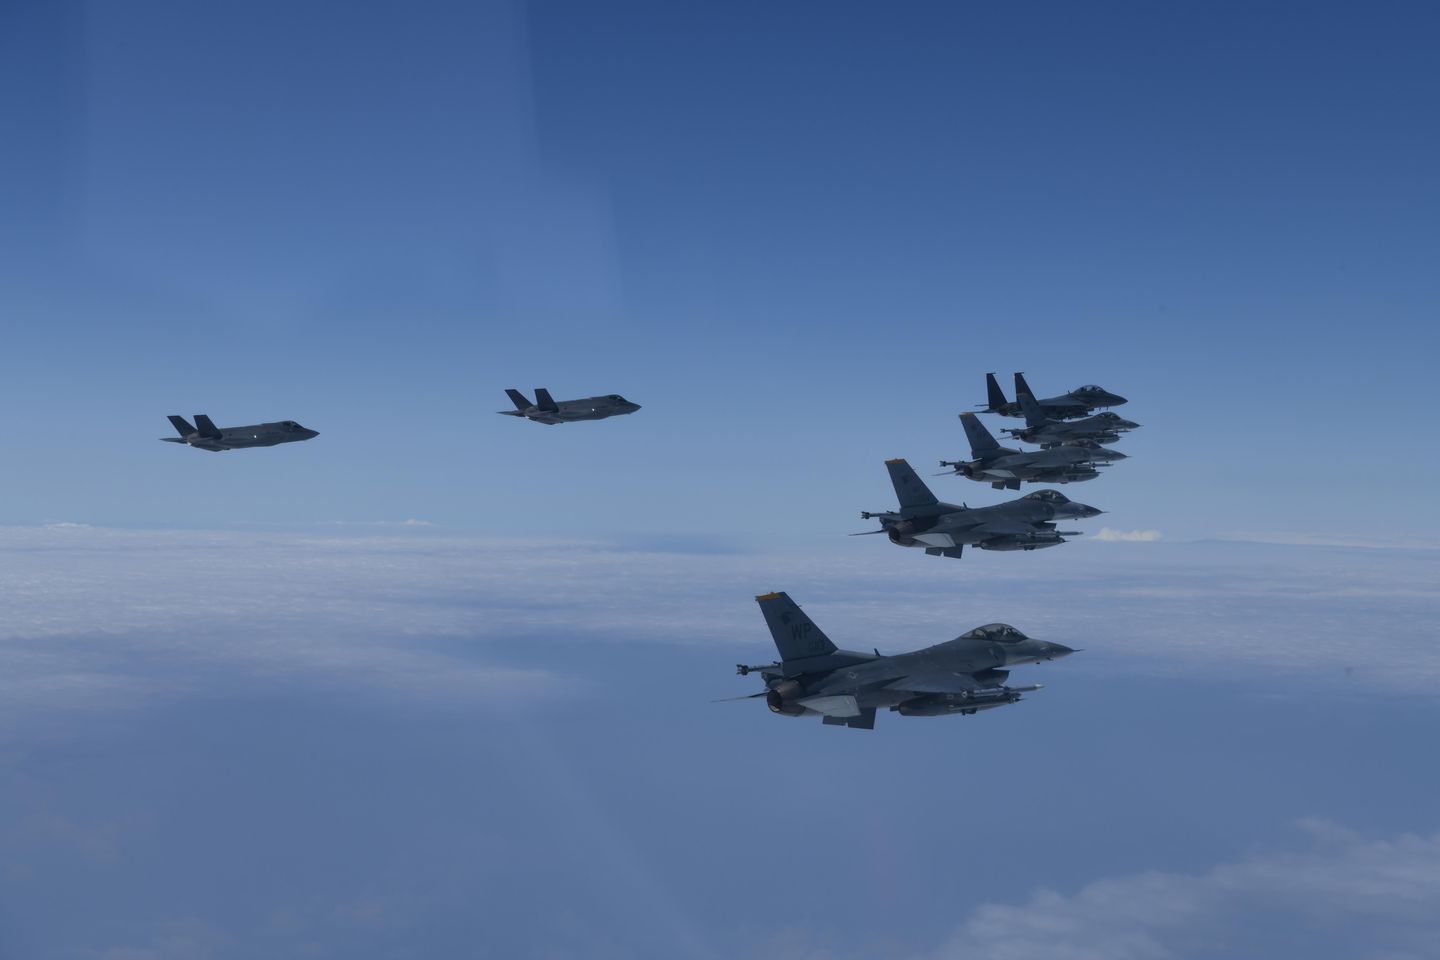 AS, Korea Selatan menerbangkan 20 jet tempur di tengah ketegangan Korea Utara